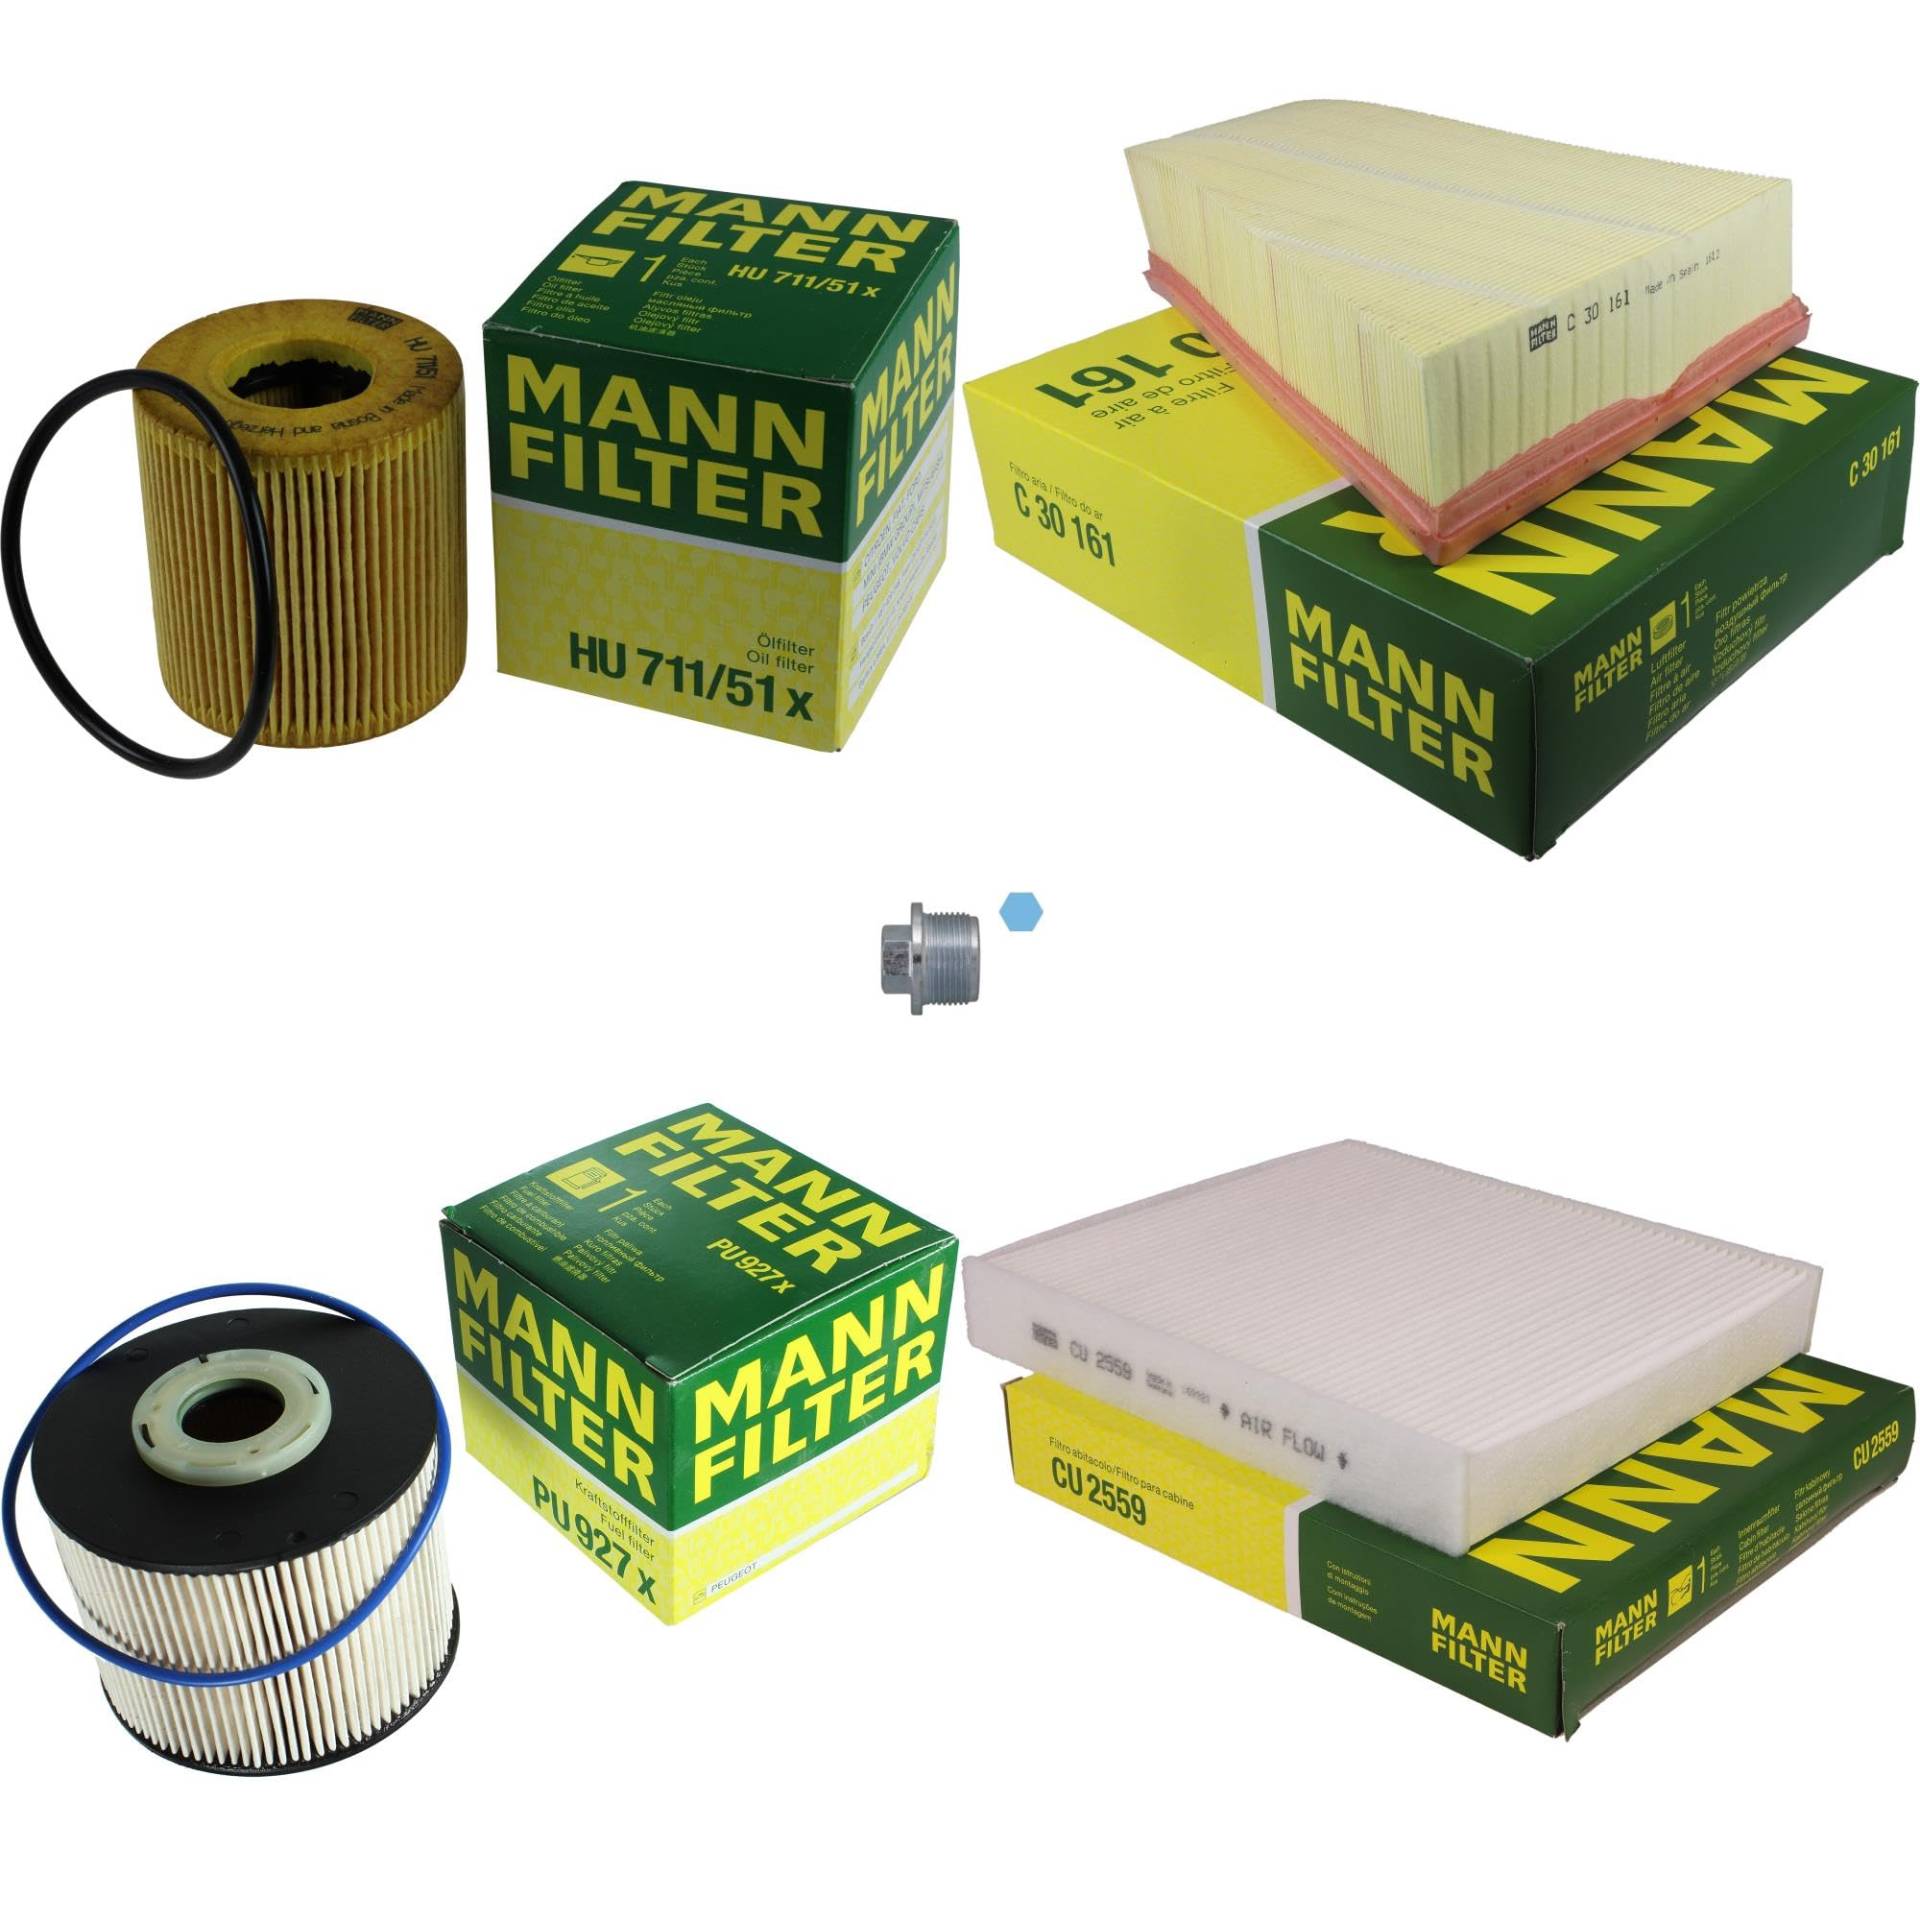 EISENFELS Filter Set Inspektionspaket erstellt mit MANN-FILTER Ölfilter HU 711/51 x, Luftfilter C 30 161, Kraftstofffilter PU 927 x, Innenraumfilter CU 2559, Verschlussschraube von EISENFELS